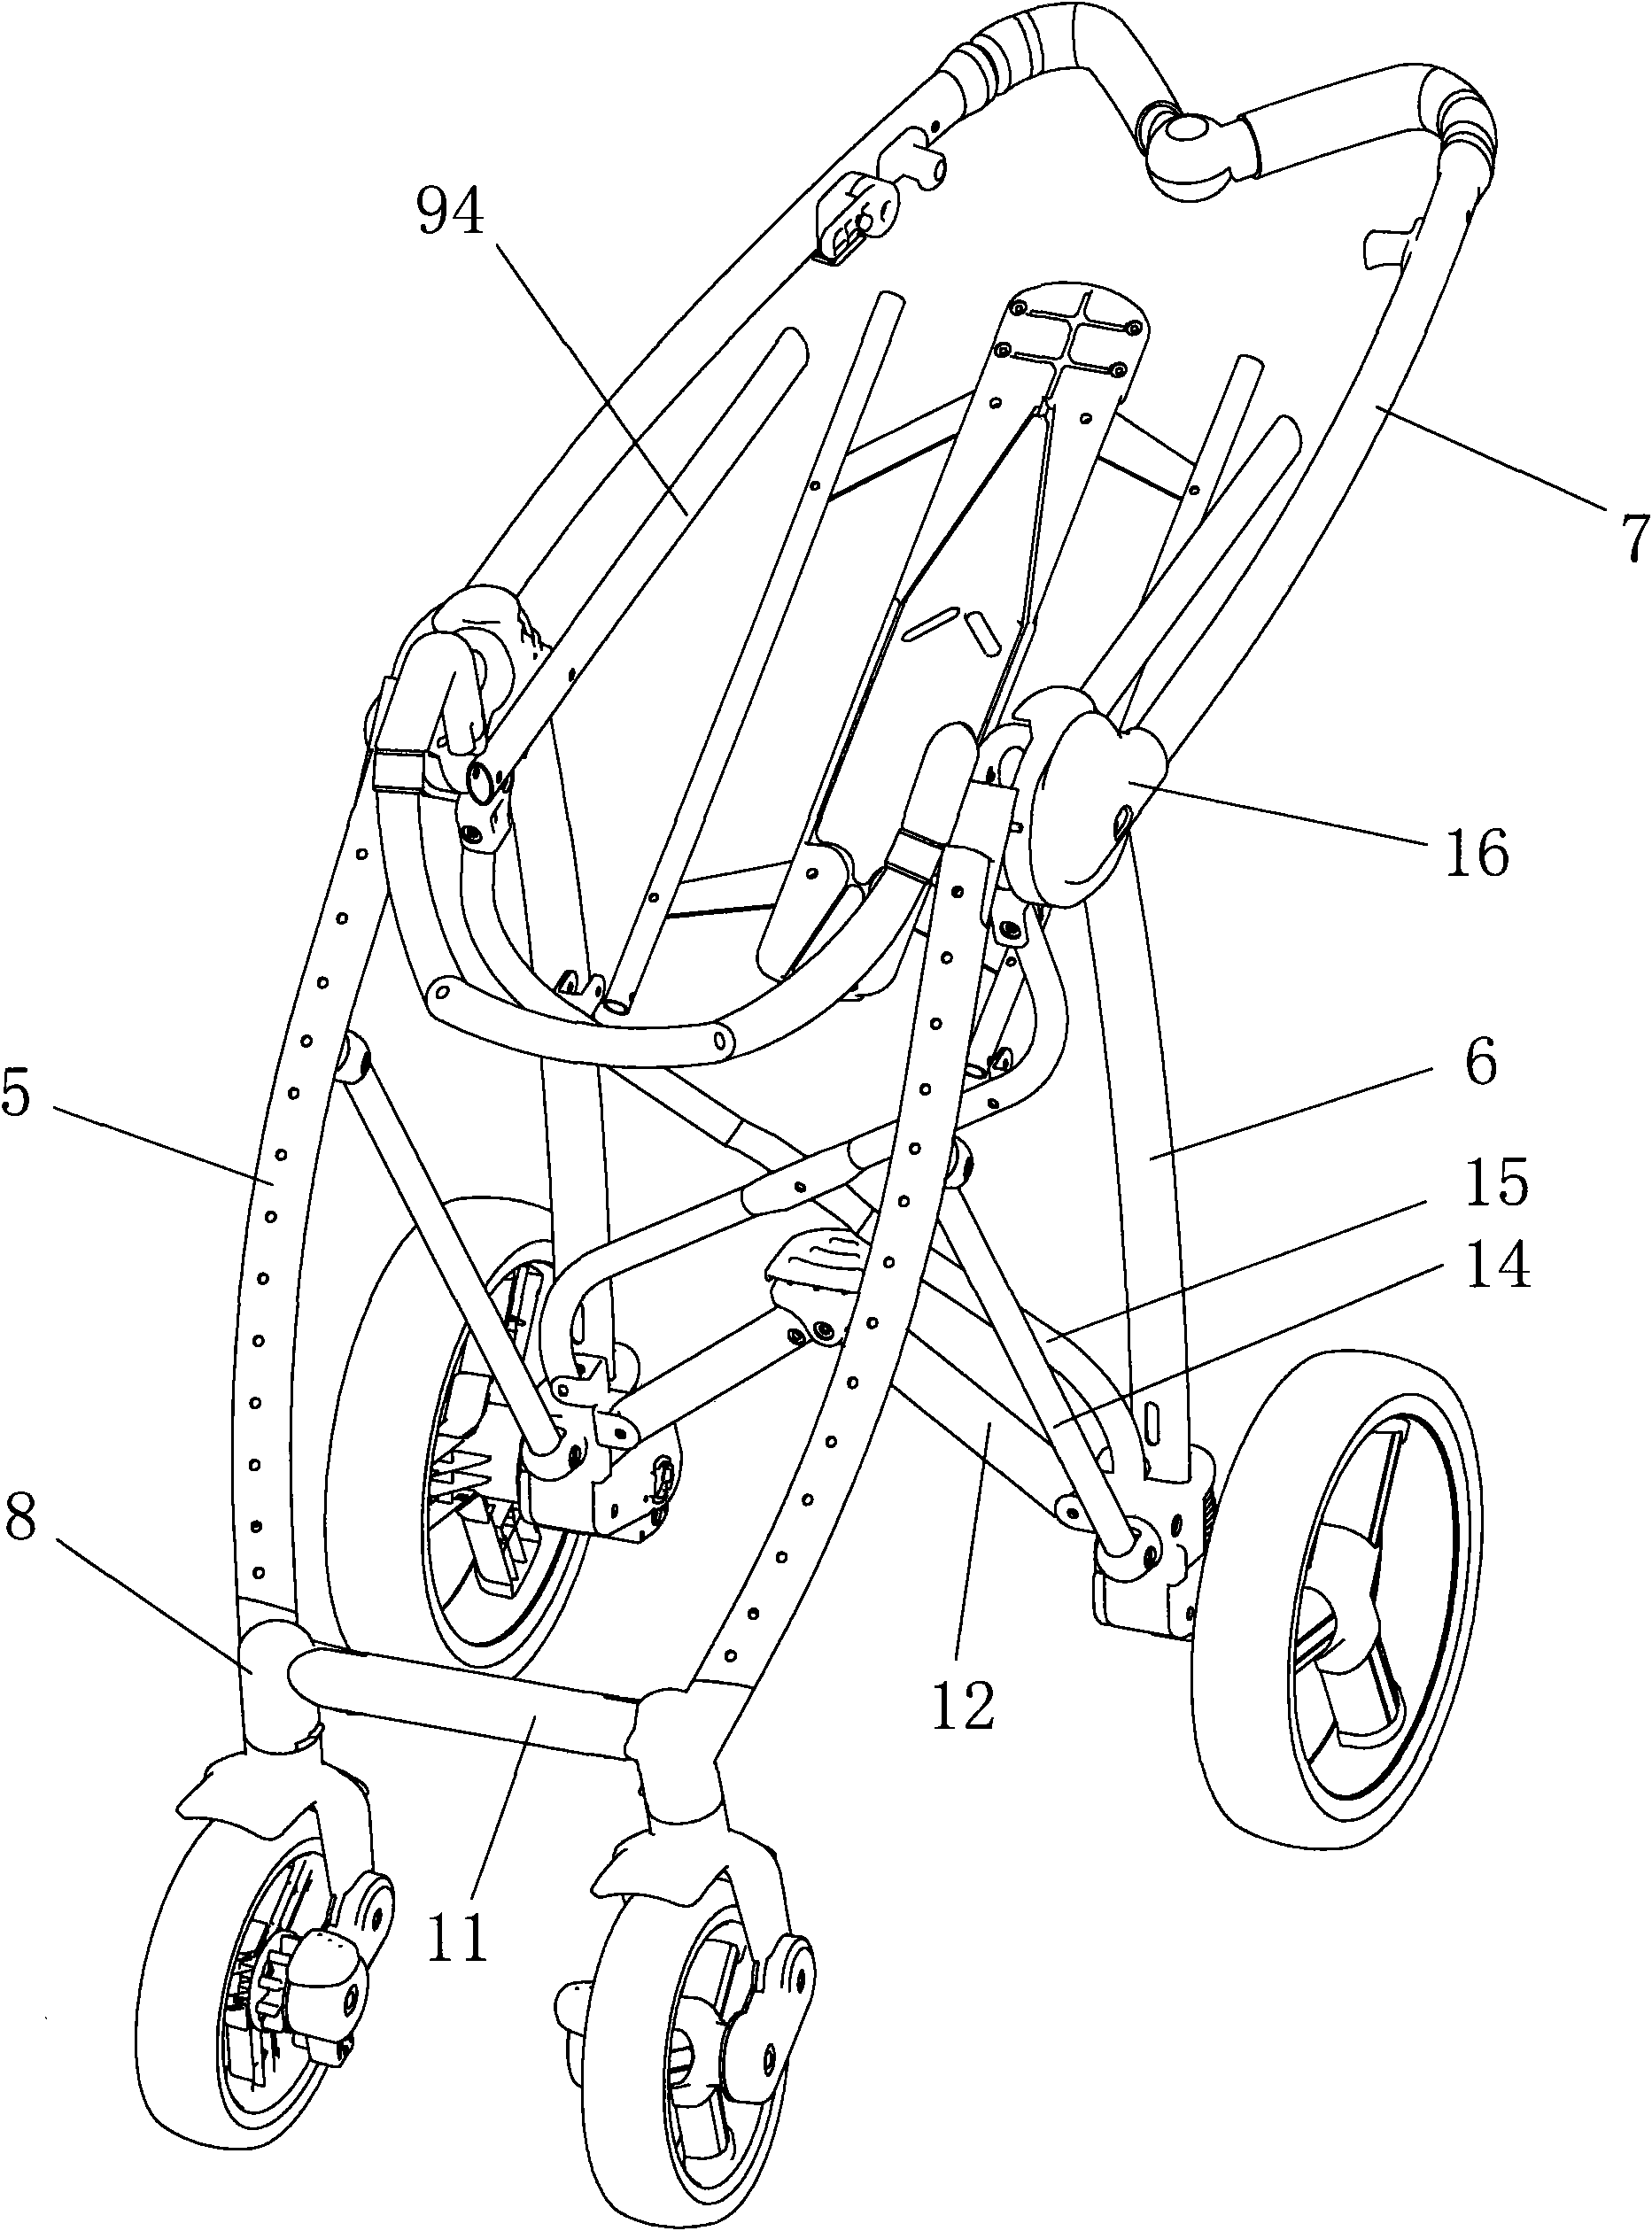 Bi-directional foldable baby stroller